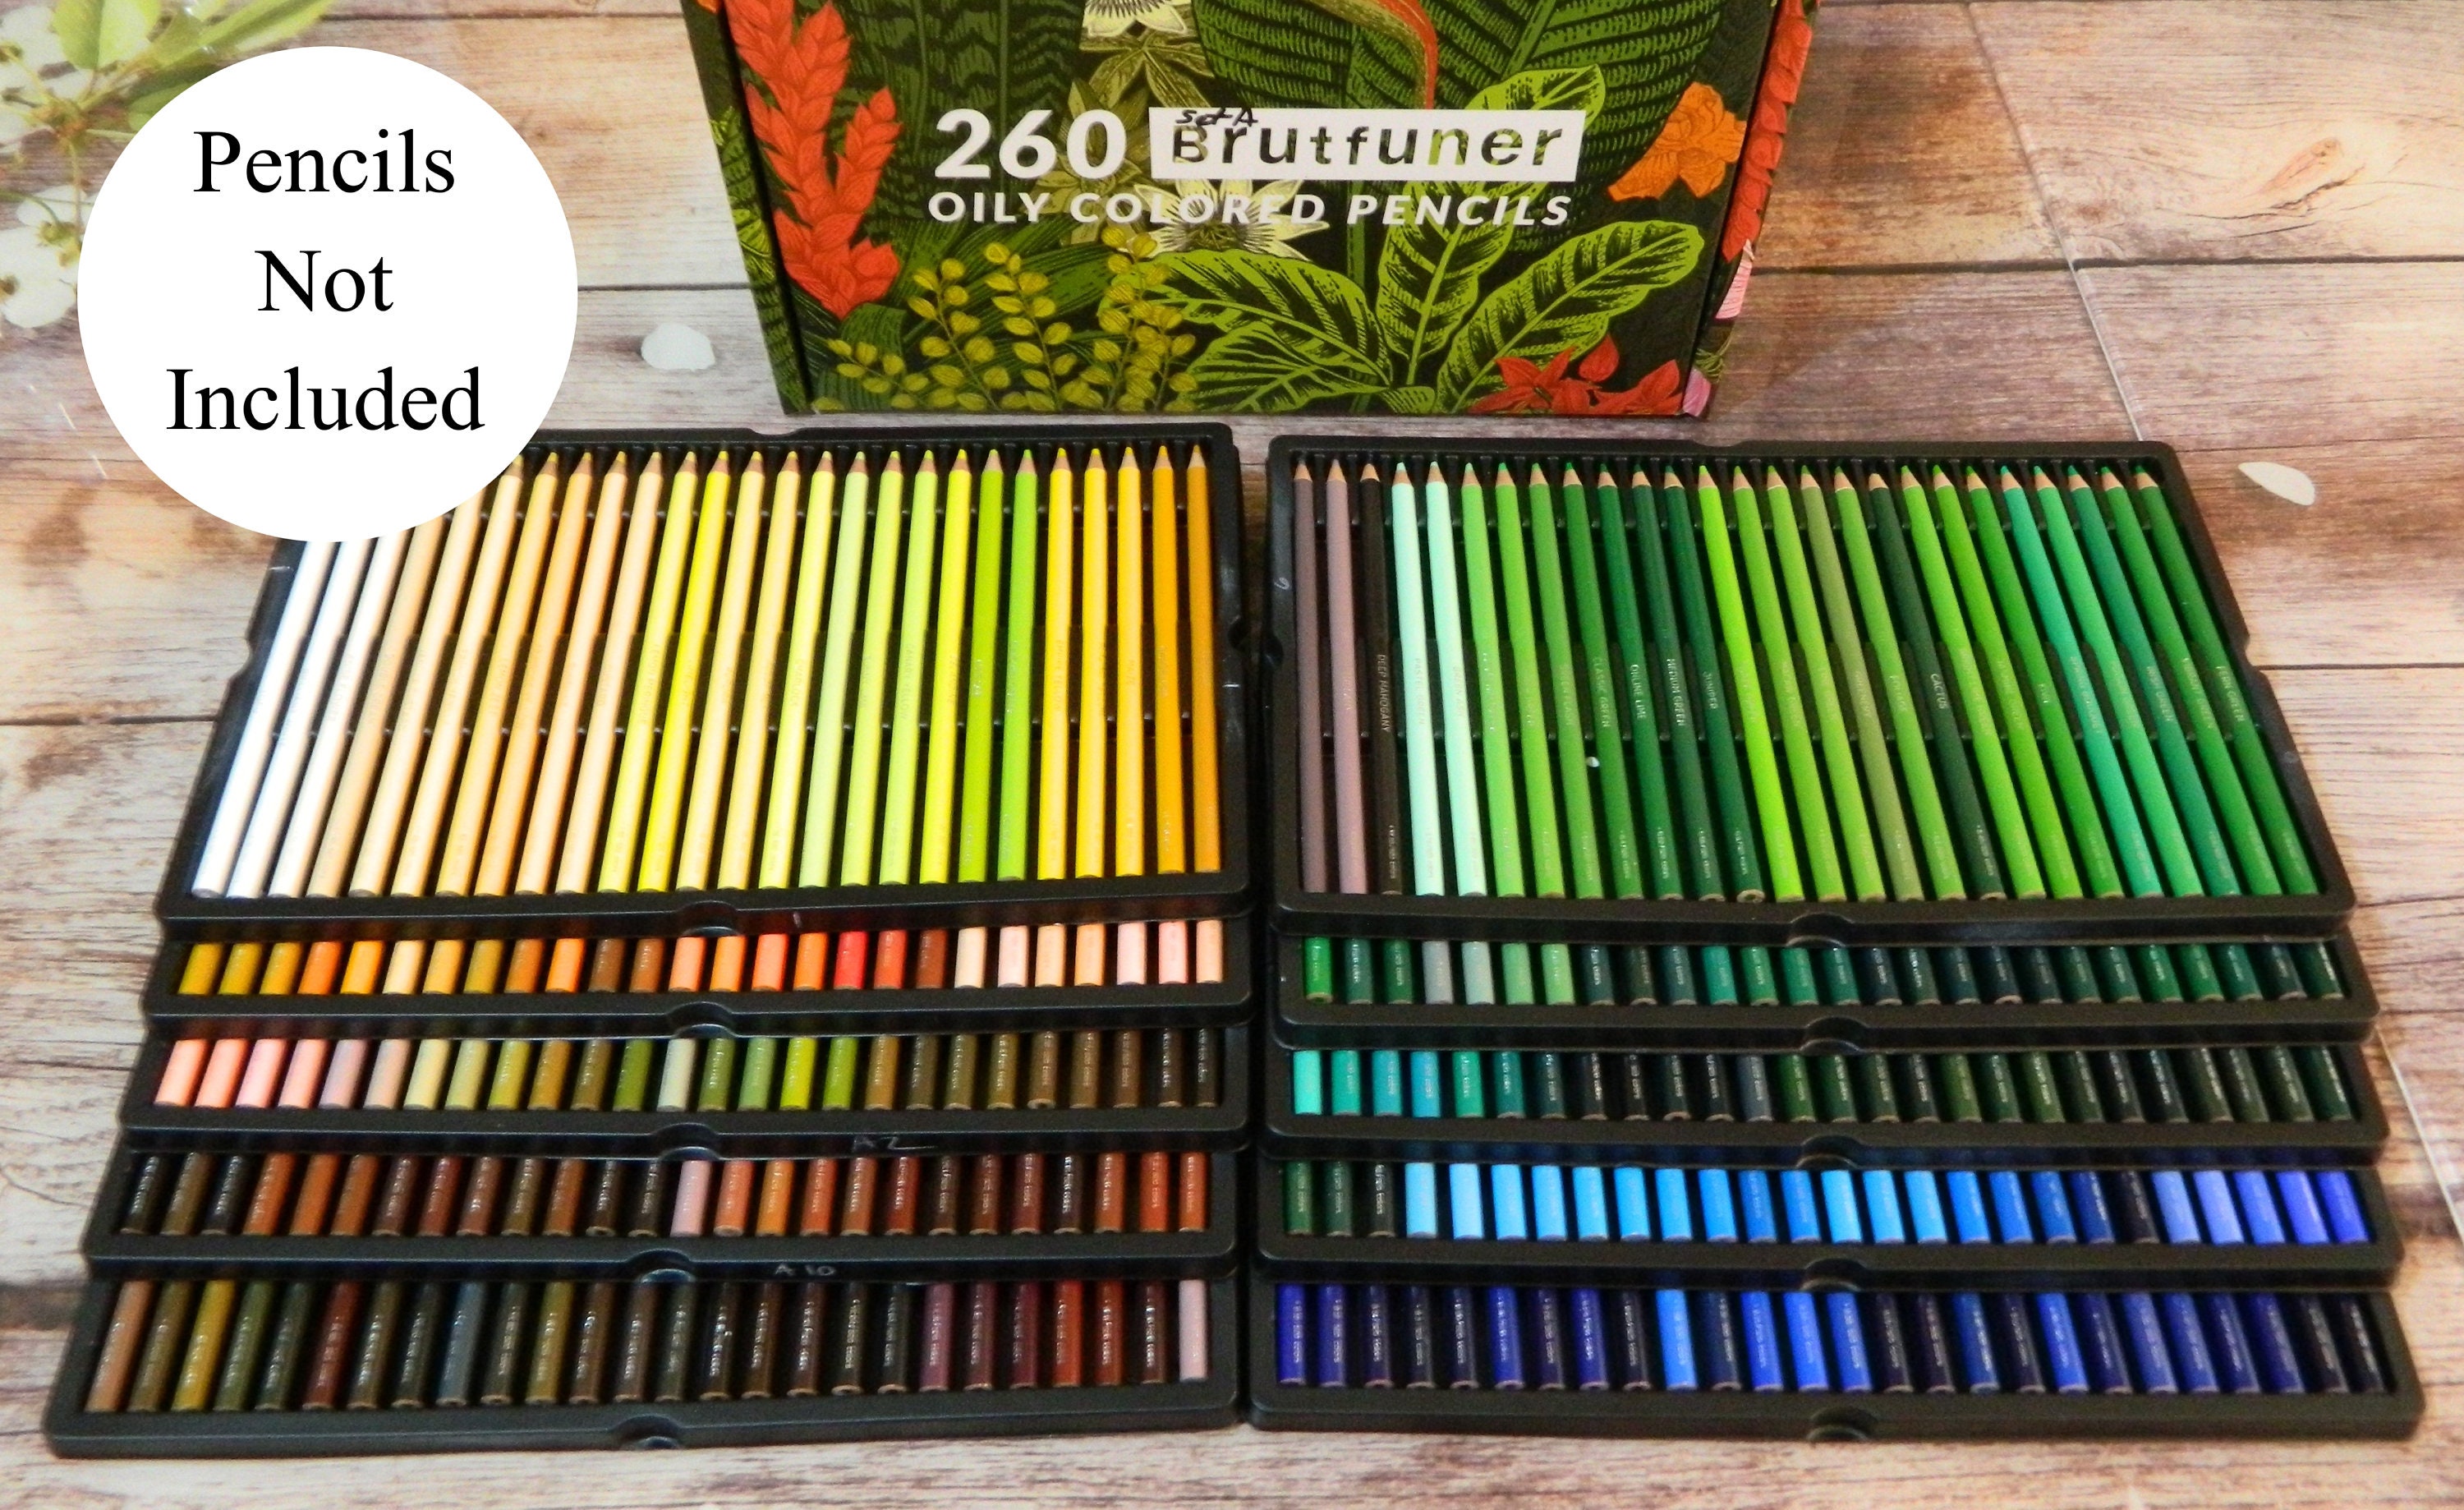 NEW! Brutfuner 520 Colored Pencils Honest Review 